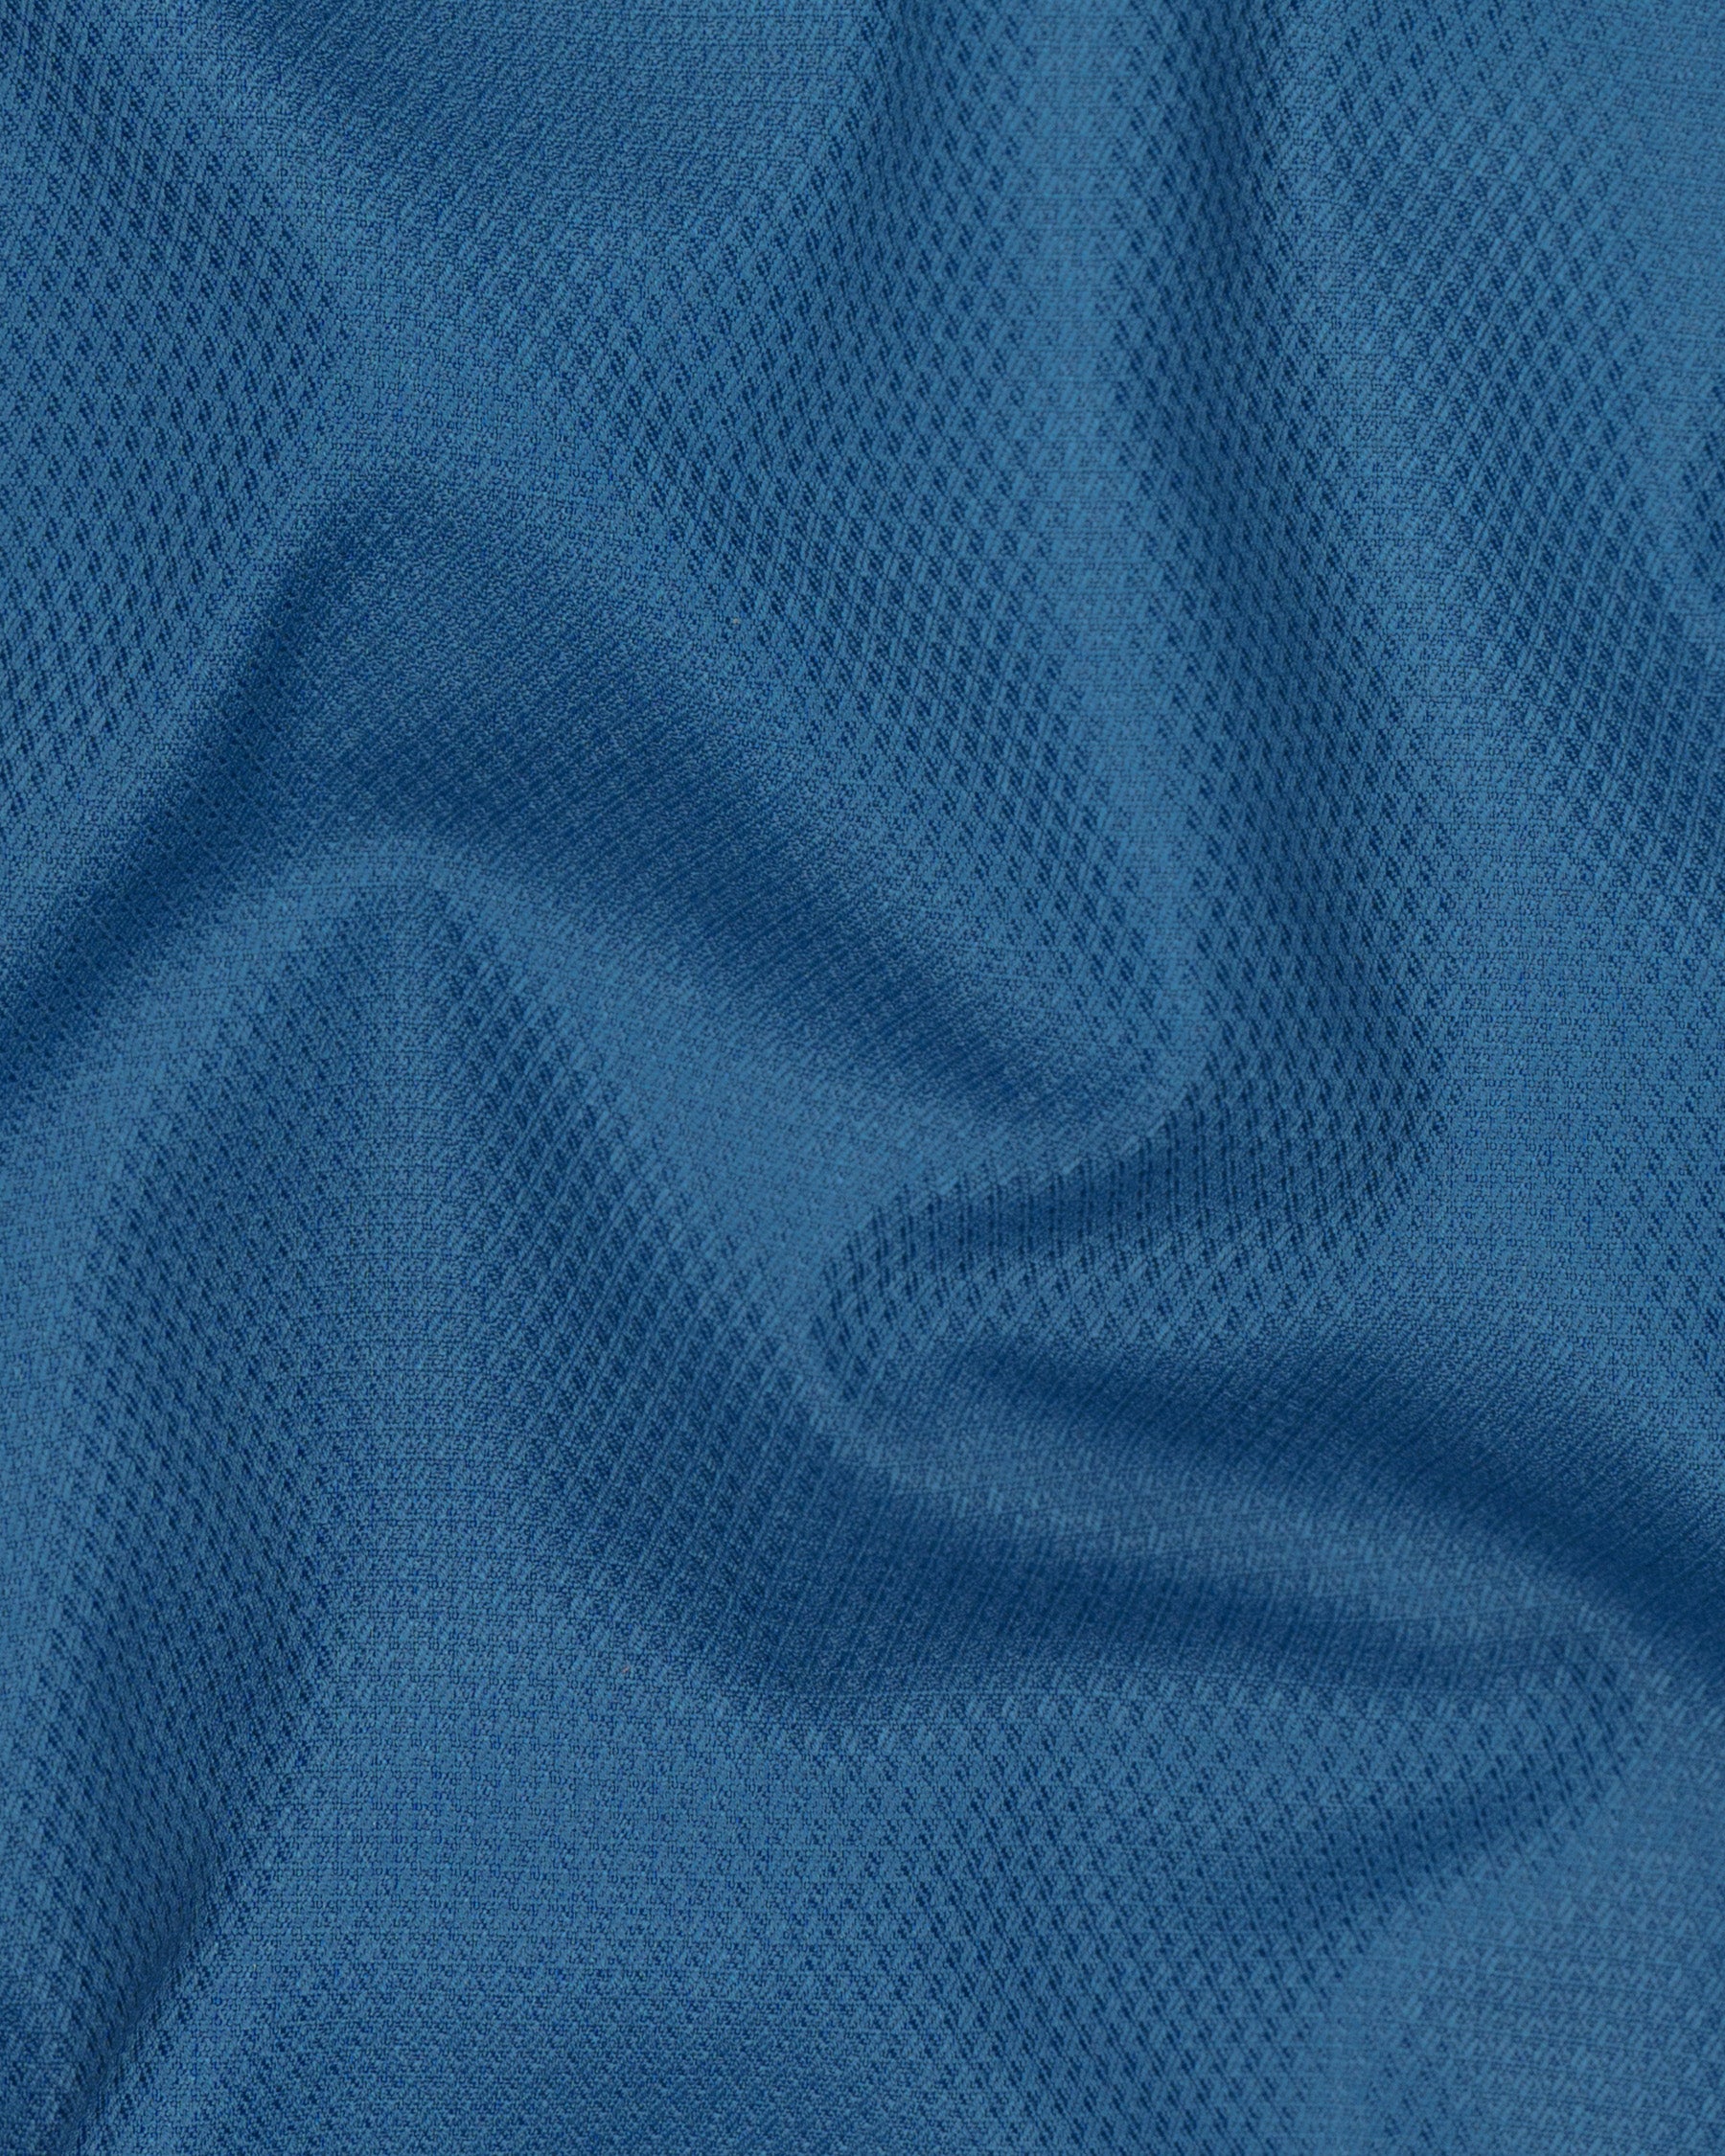 Orient Blue Diamond Textured Woolrich Pant